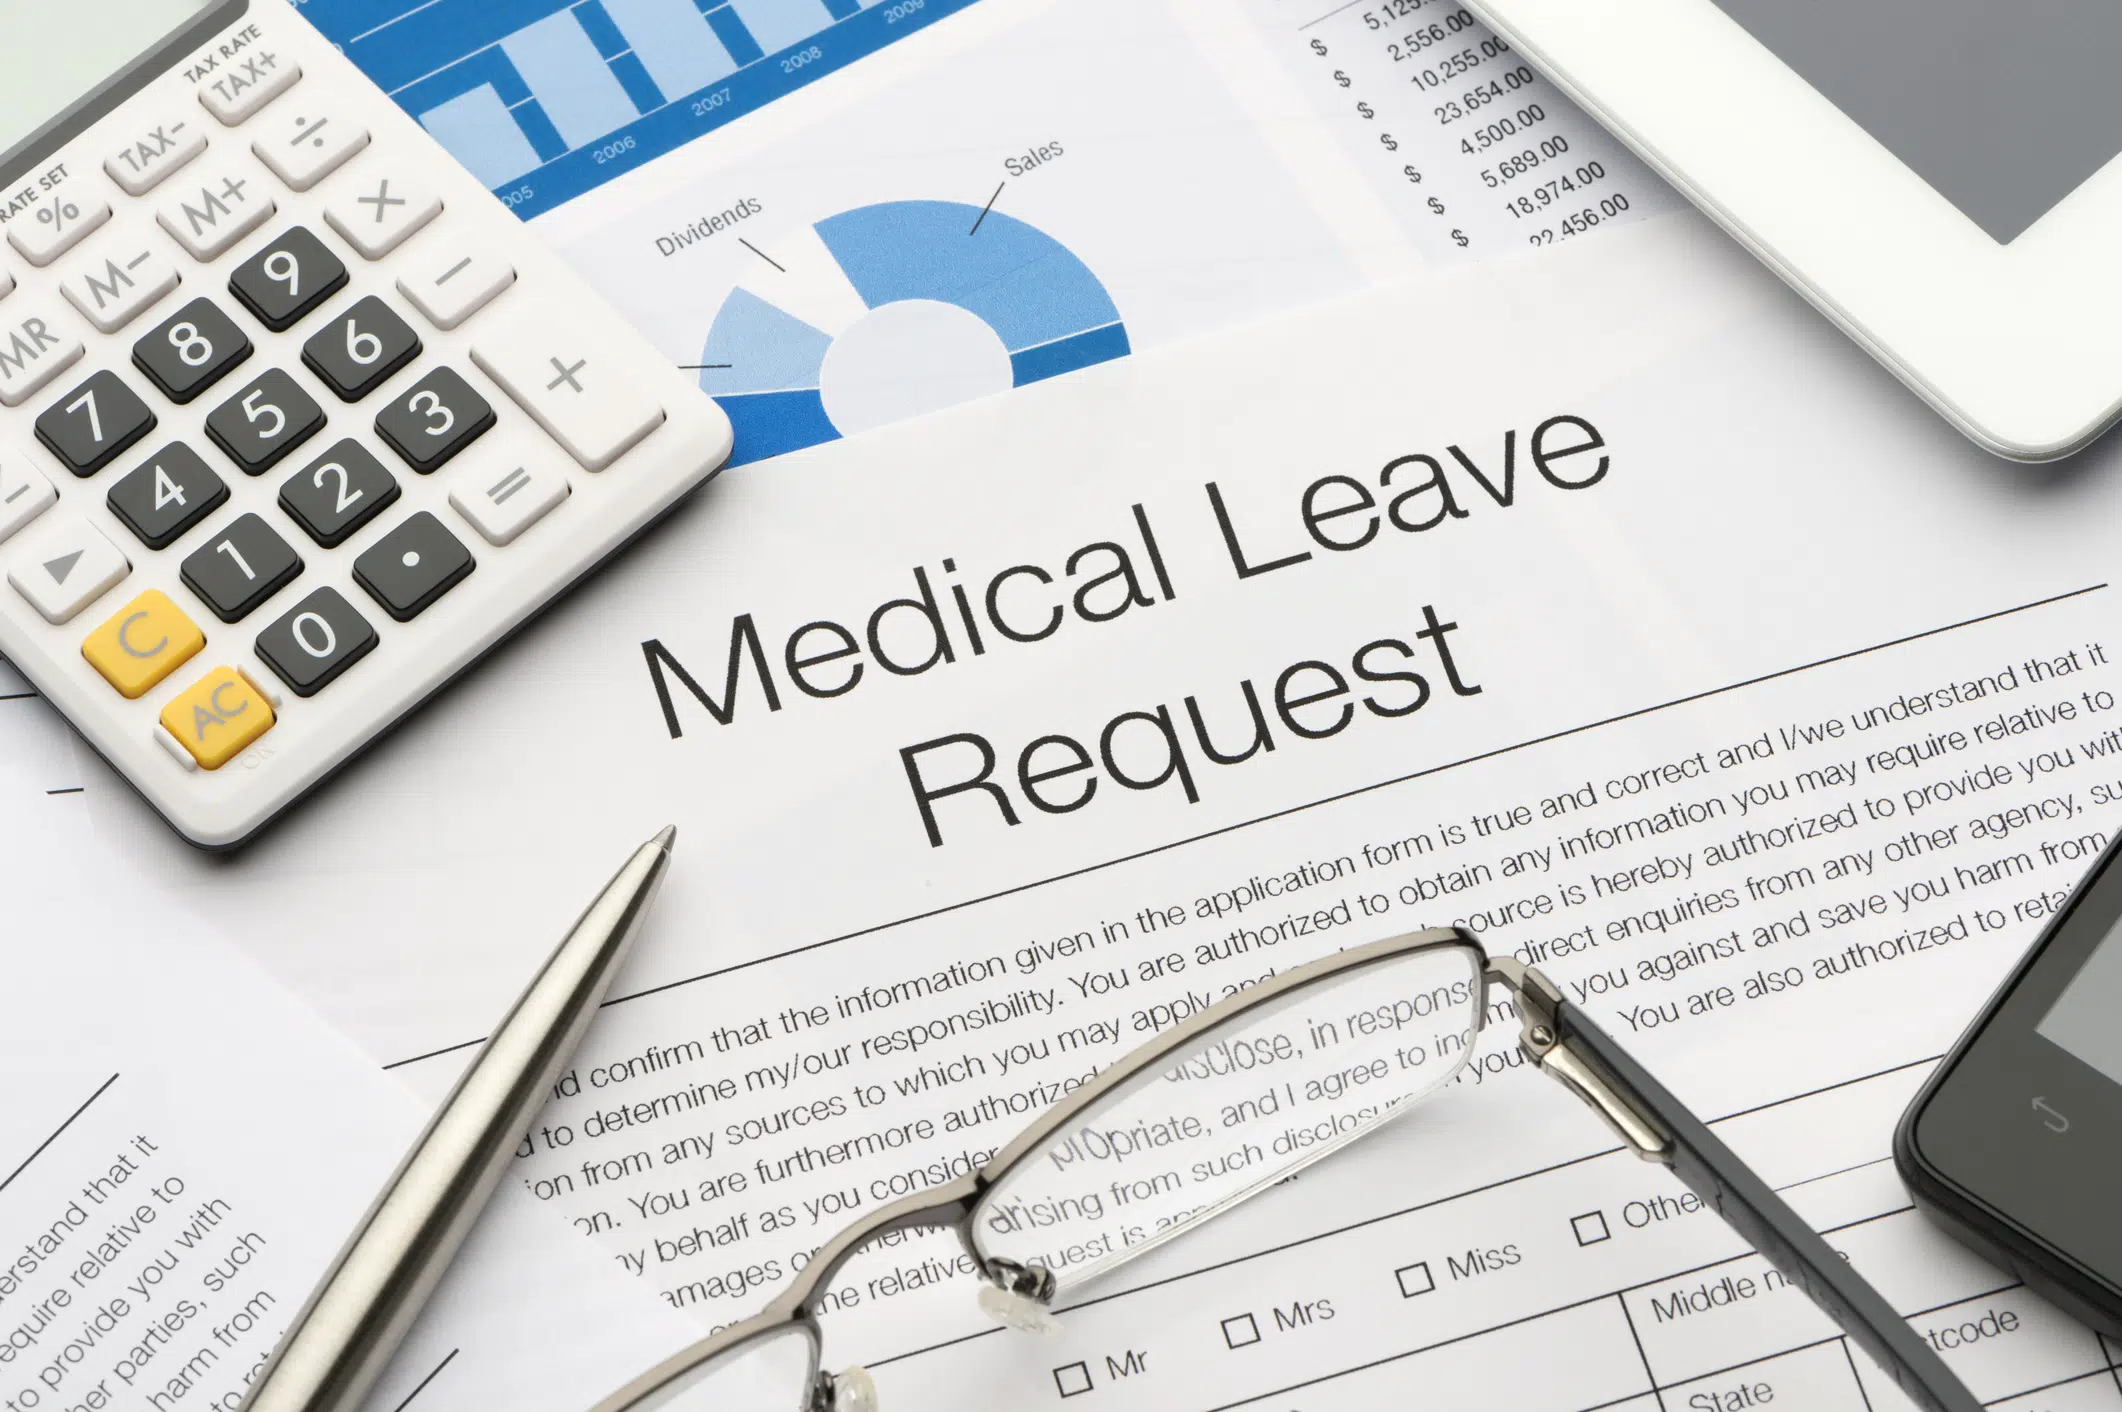 How Do Holidays Affect FMLA Leave?